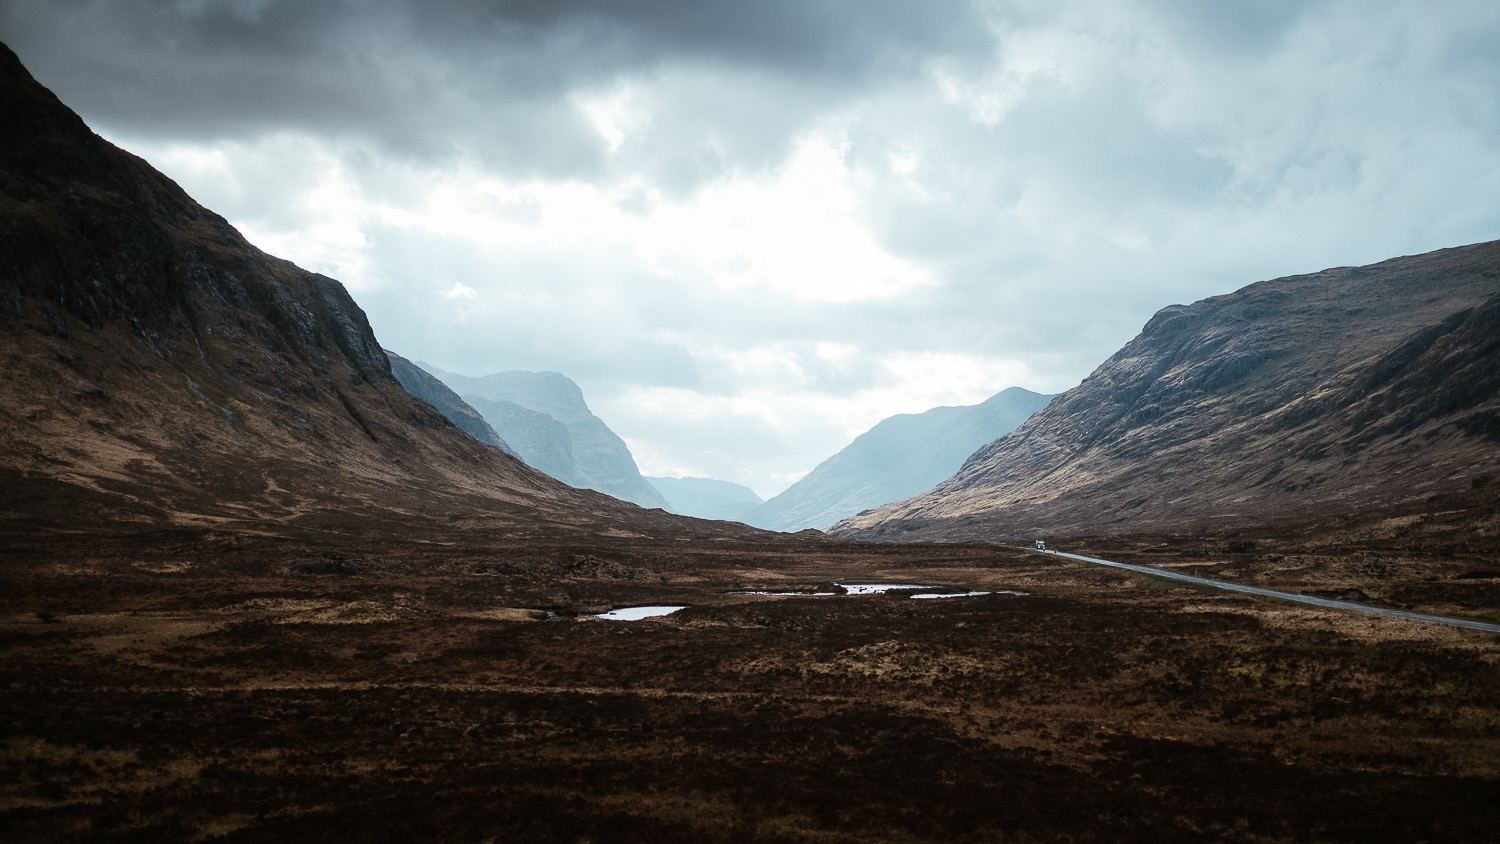 0015-scotland-tamron-le monde de la photo-paysage-20190507190156-compress.jpg